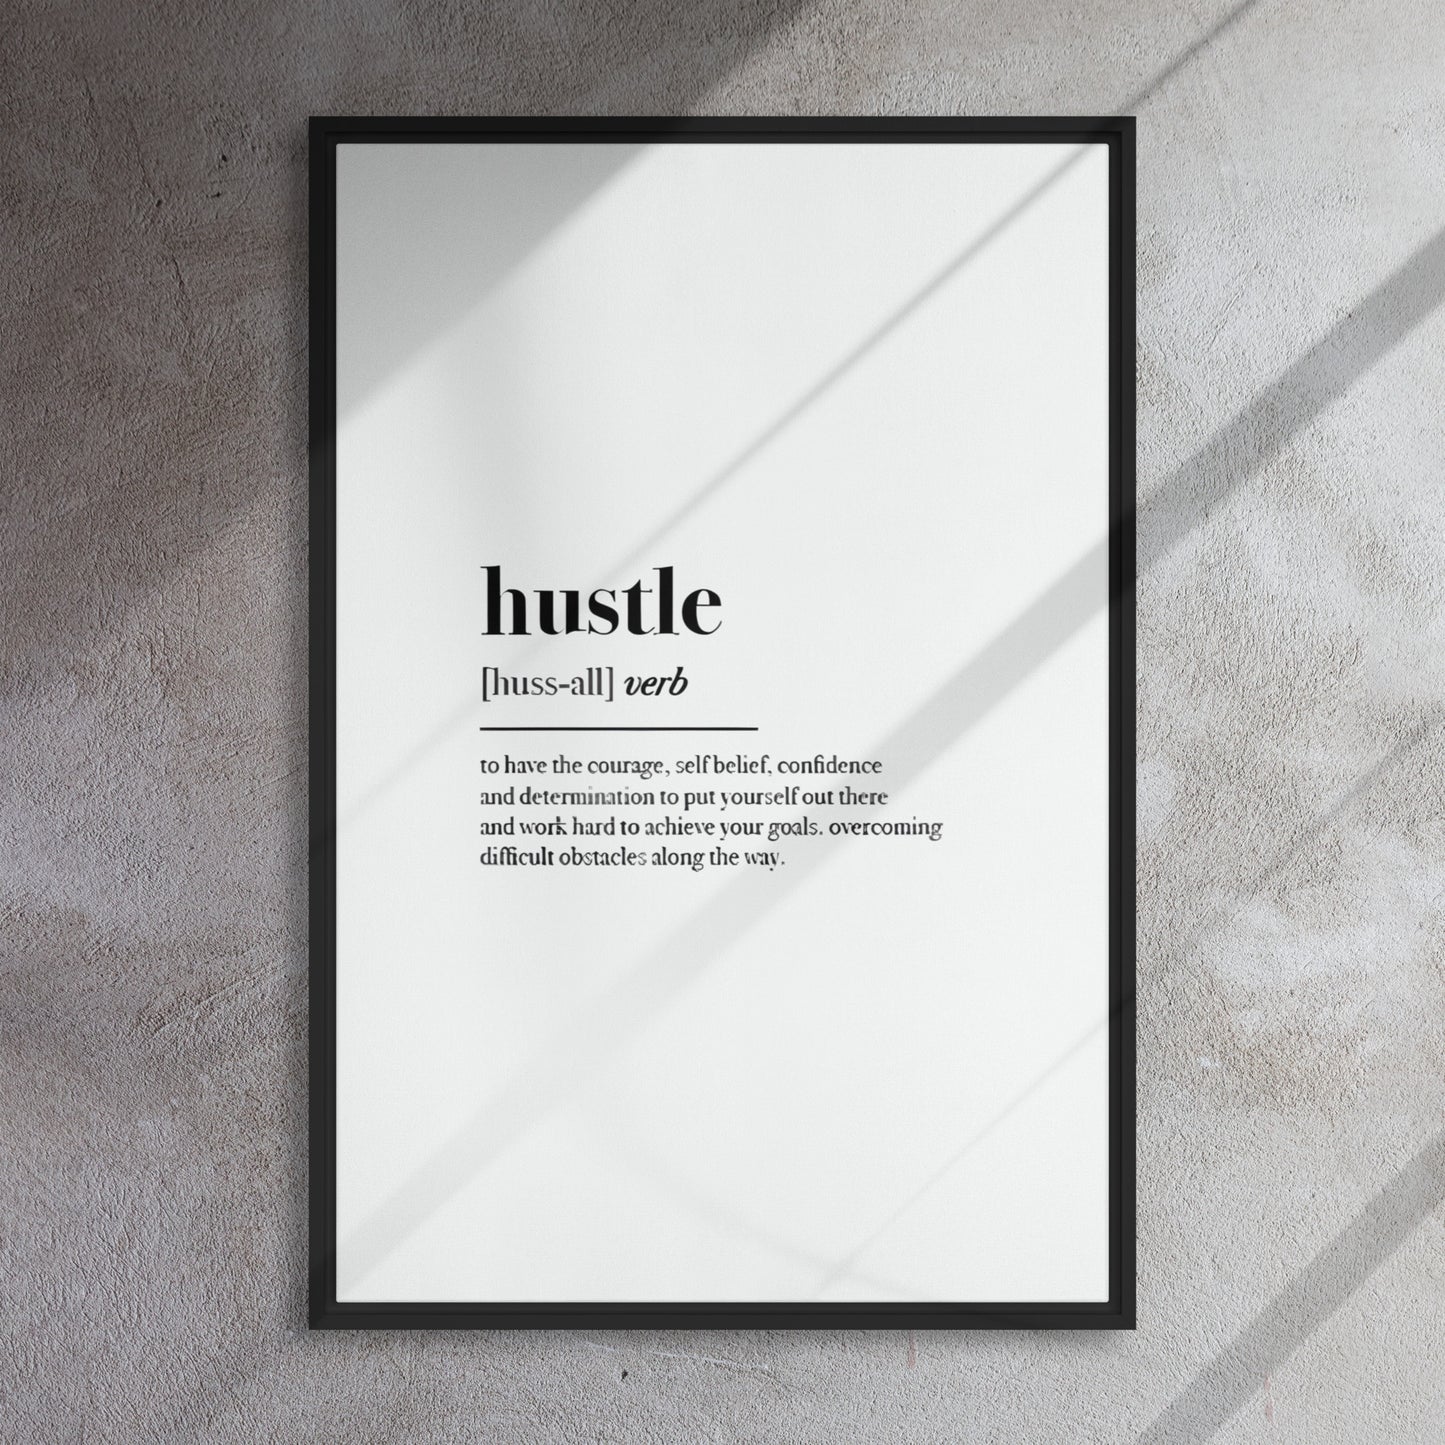 Hustle - Framed Canvas